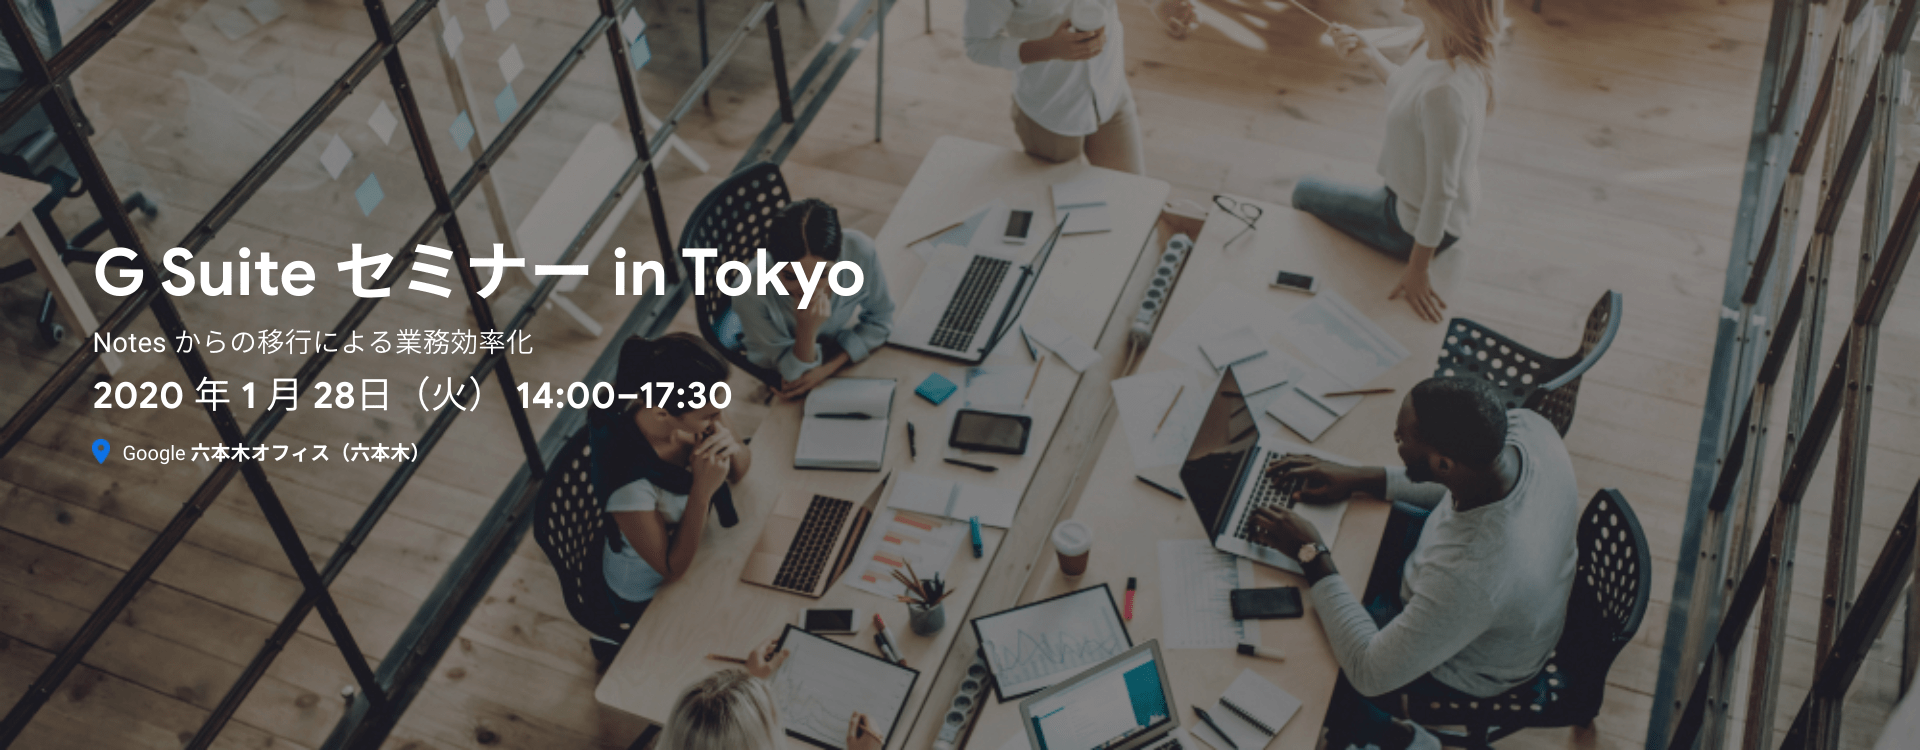 G Suite セミナー in Tokyo Notes からの移行による業務効率化